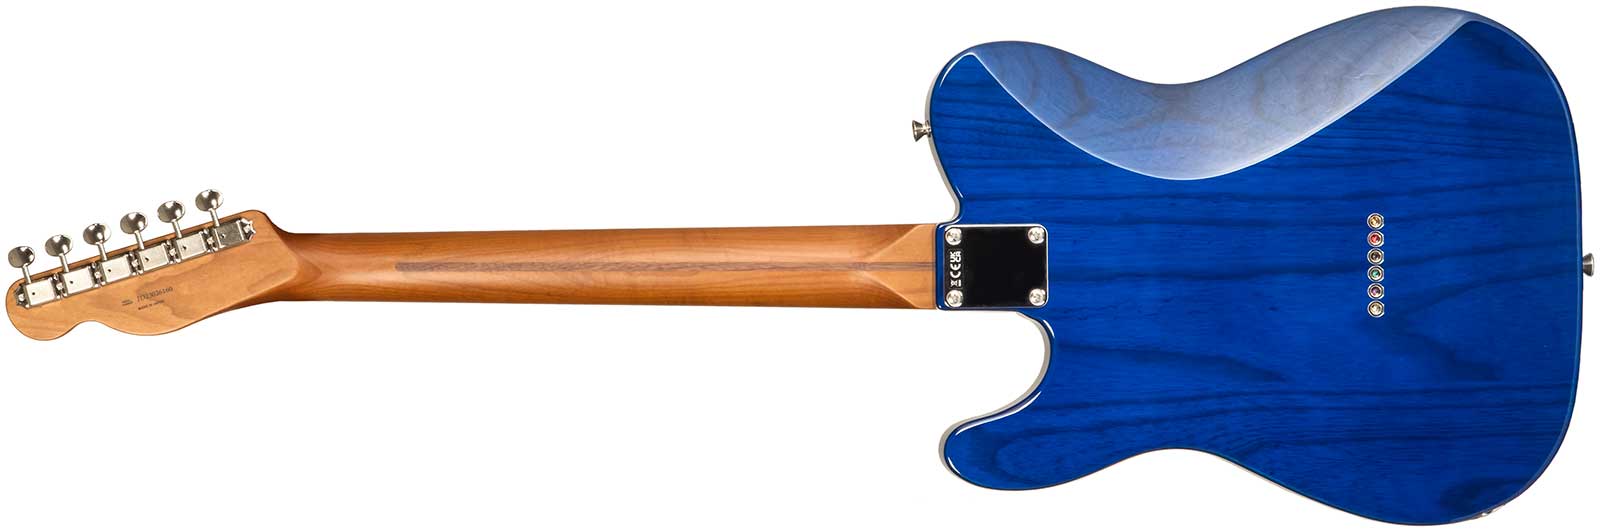 Fender Tele Hybrid Ii Jap 2s Ht Mn - Aqua Blue - Televorm elektrische gitaar - Variation 1